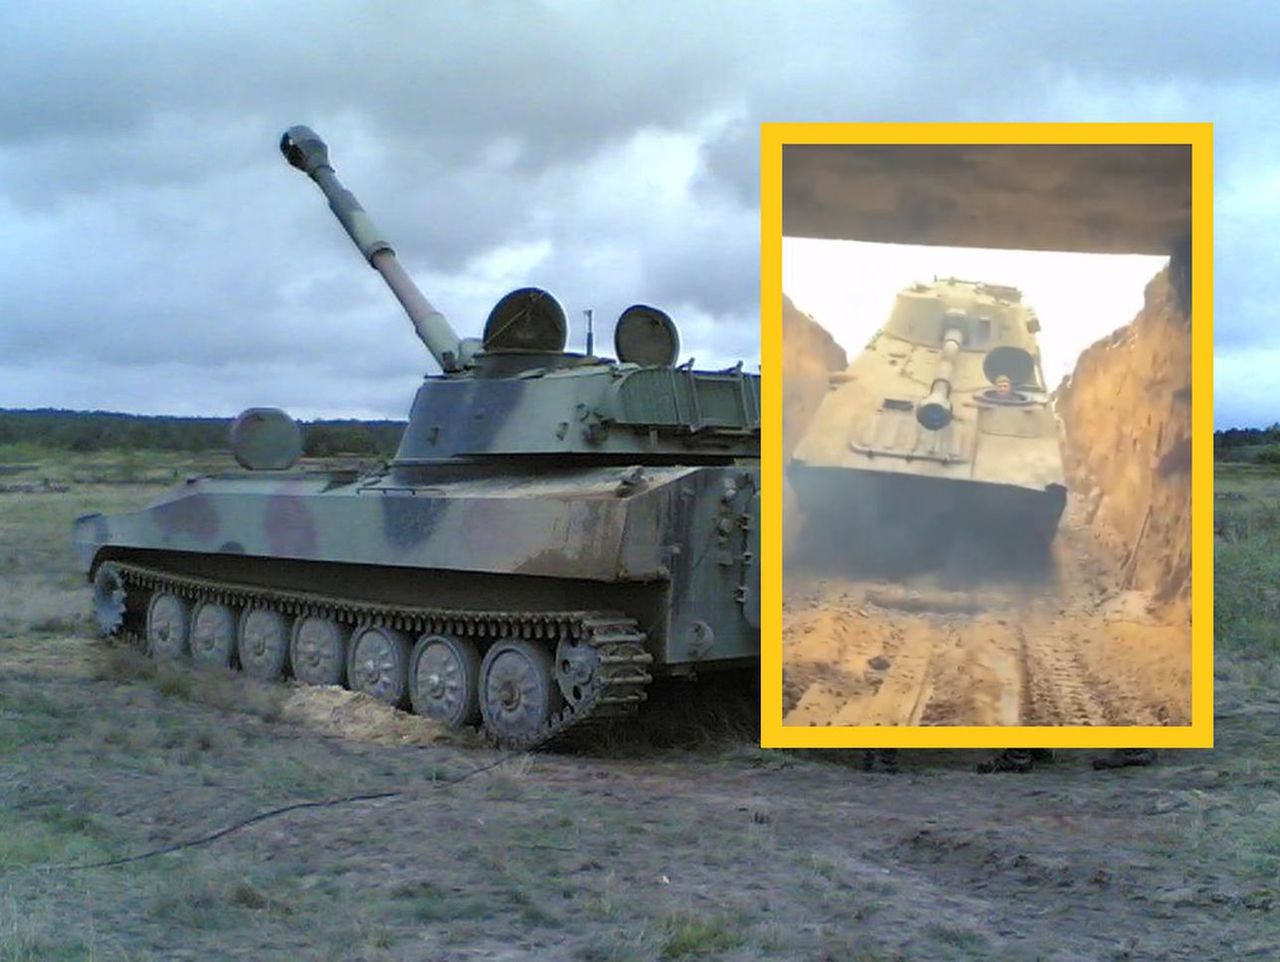 Ukrainian soldiers use ingenious tactics to survive "drone war". Underground shelter shields 2S1 Gvozdika howitzer